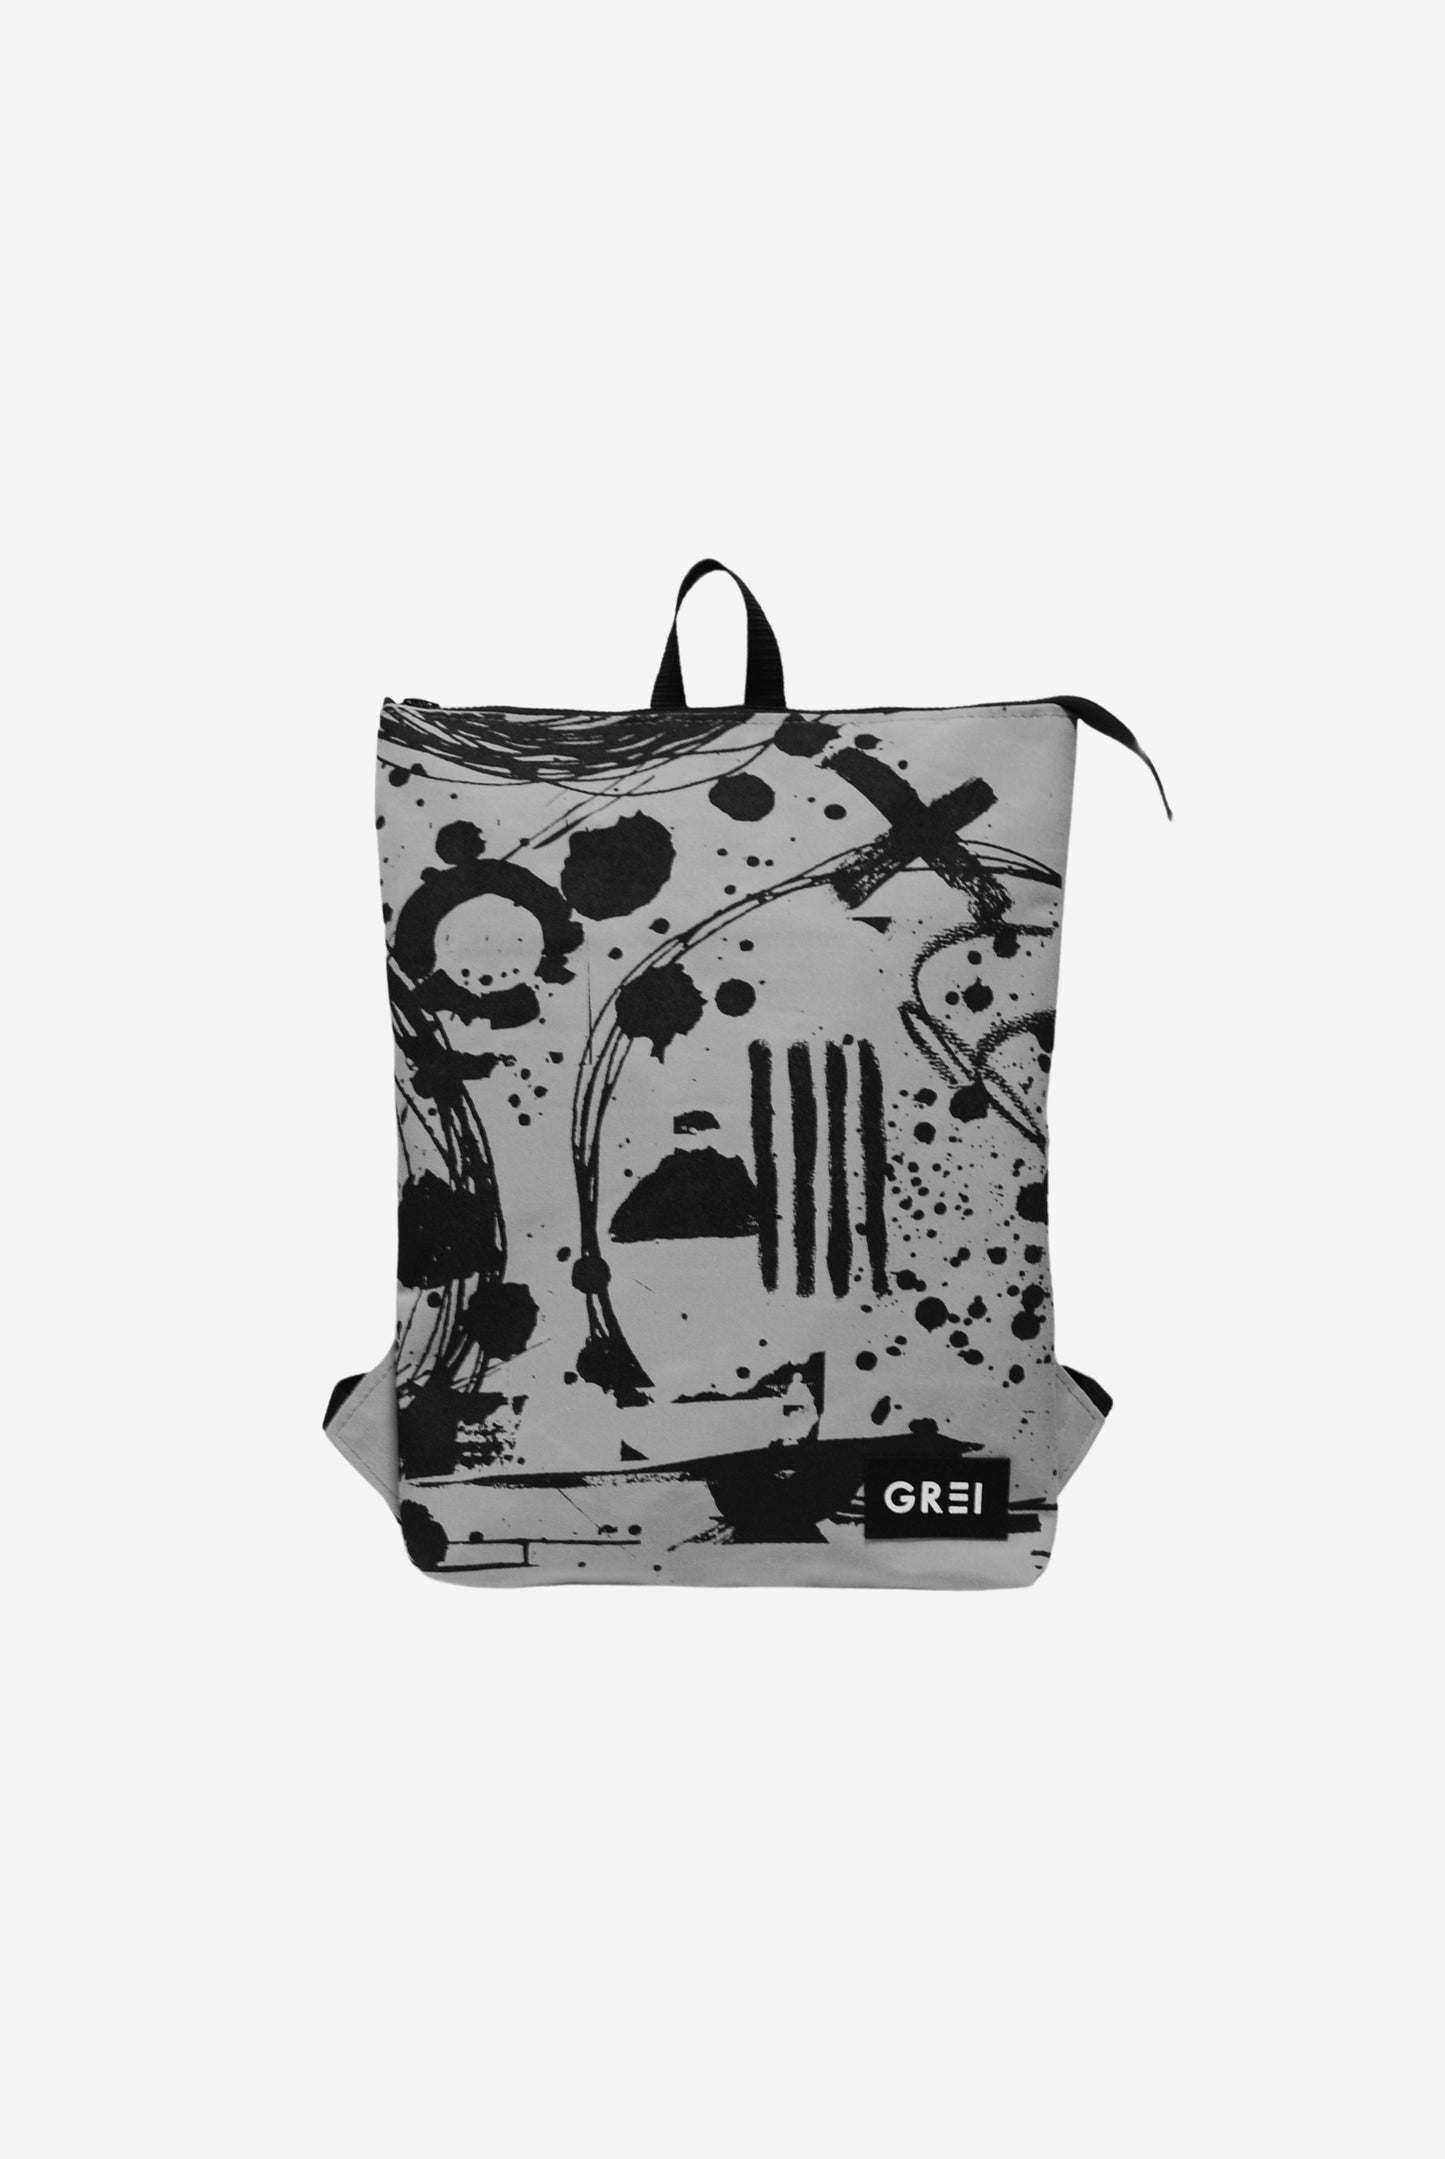 GREI Backpack Crush Grey - Black